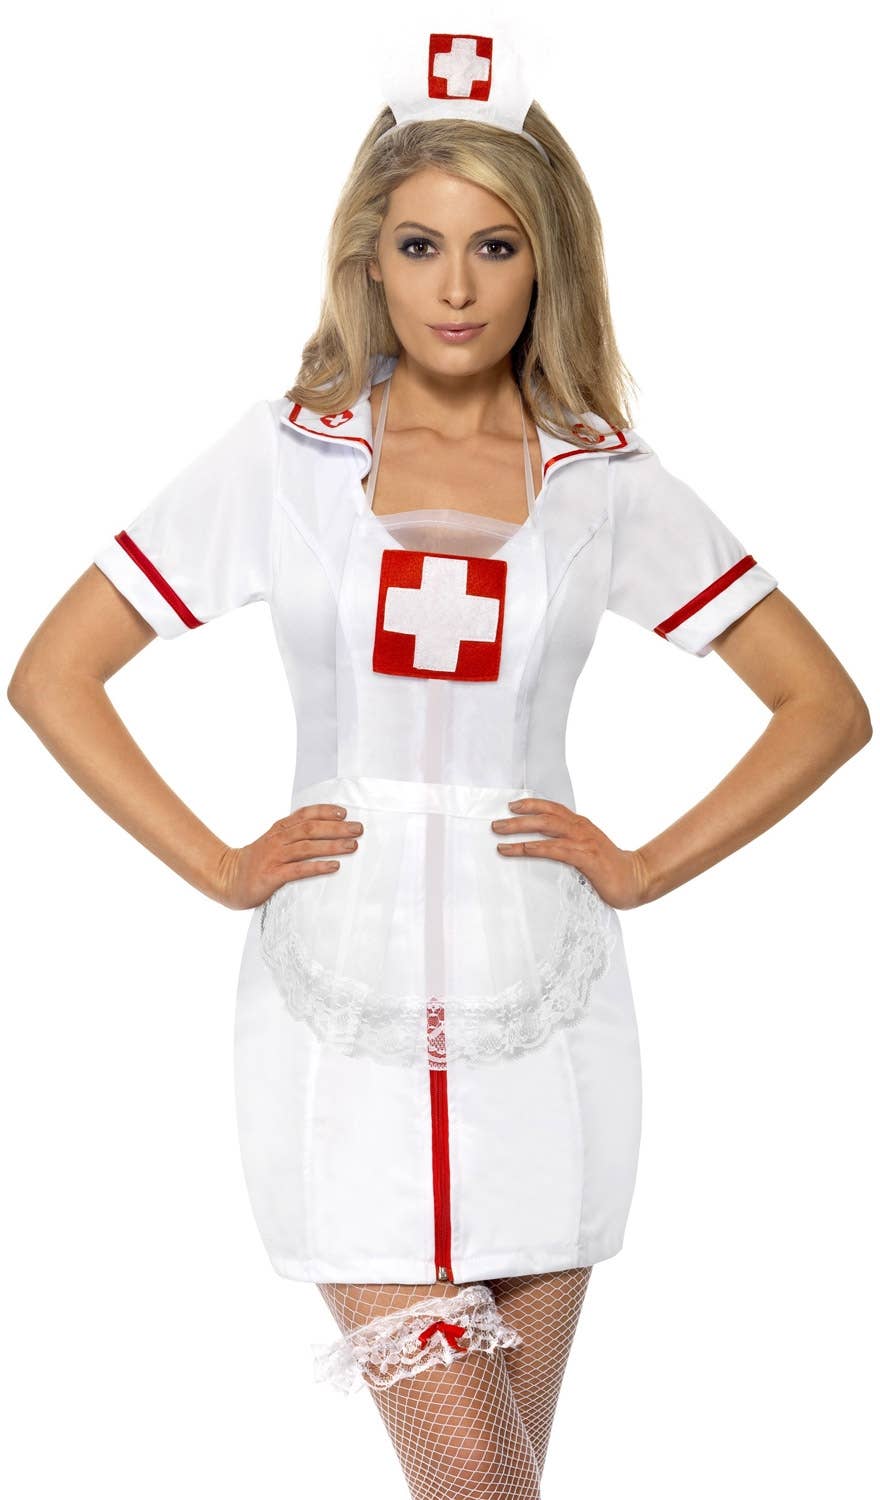 Naughty Nurse Costume Accessory Kit for Women